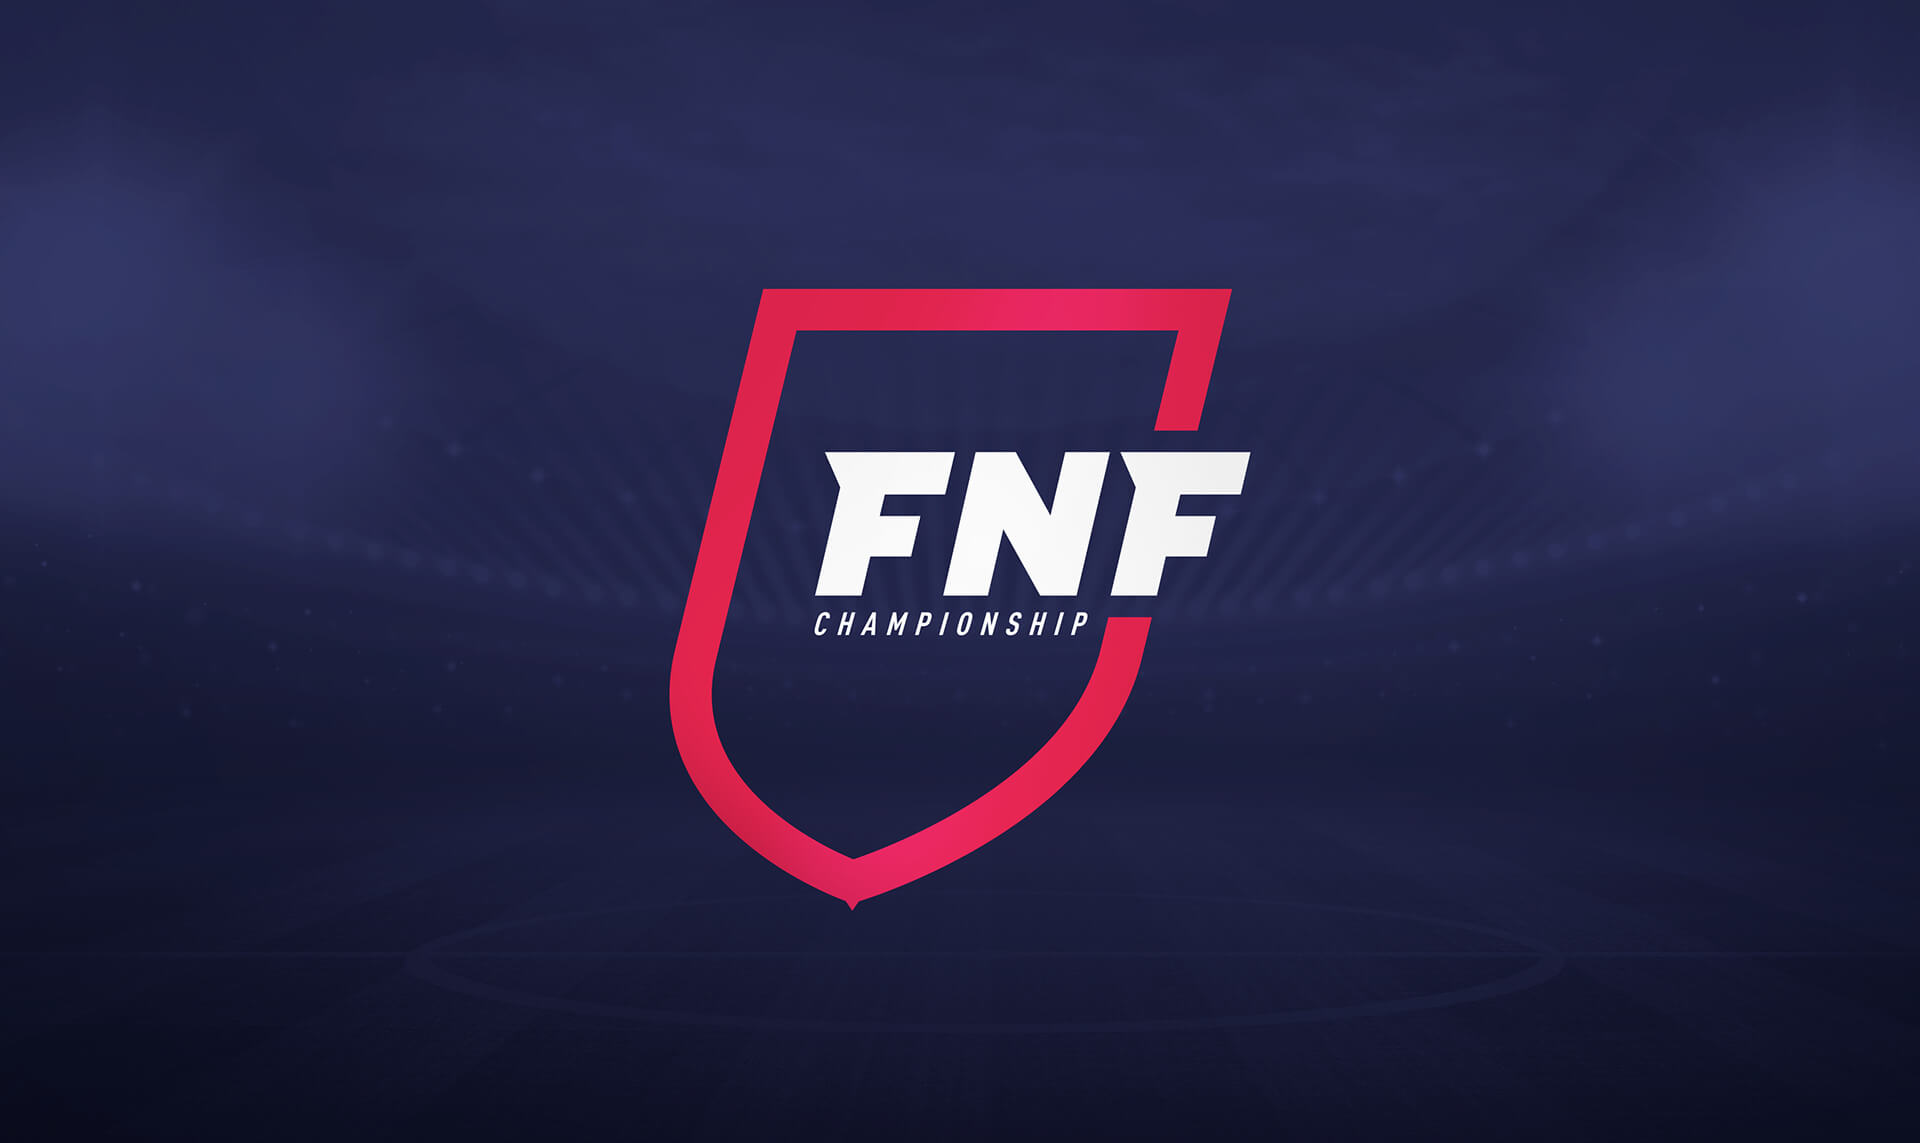 FNF Championship